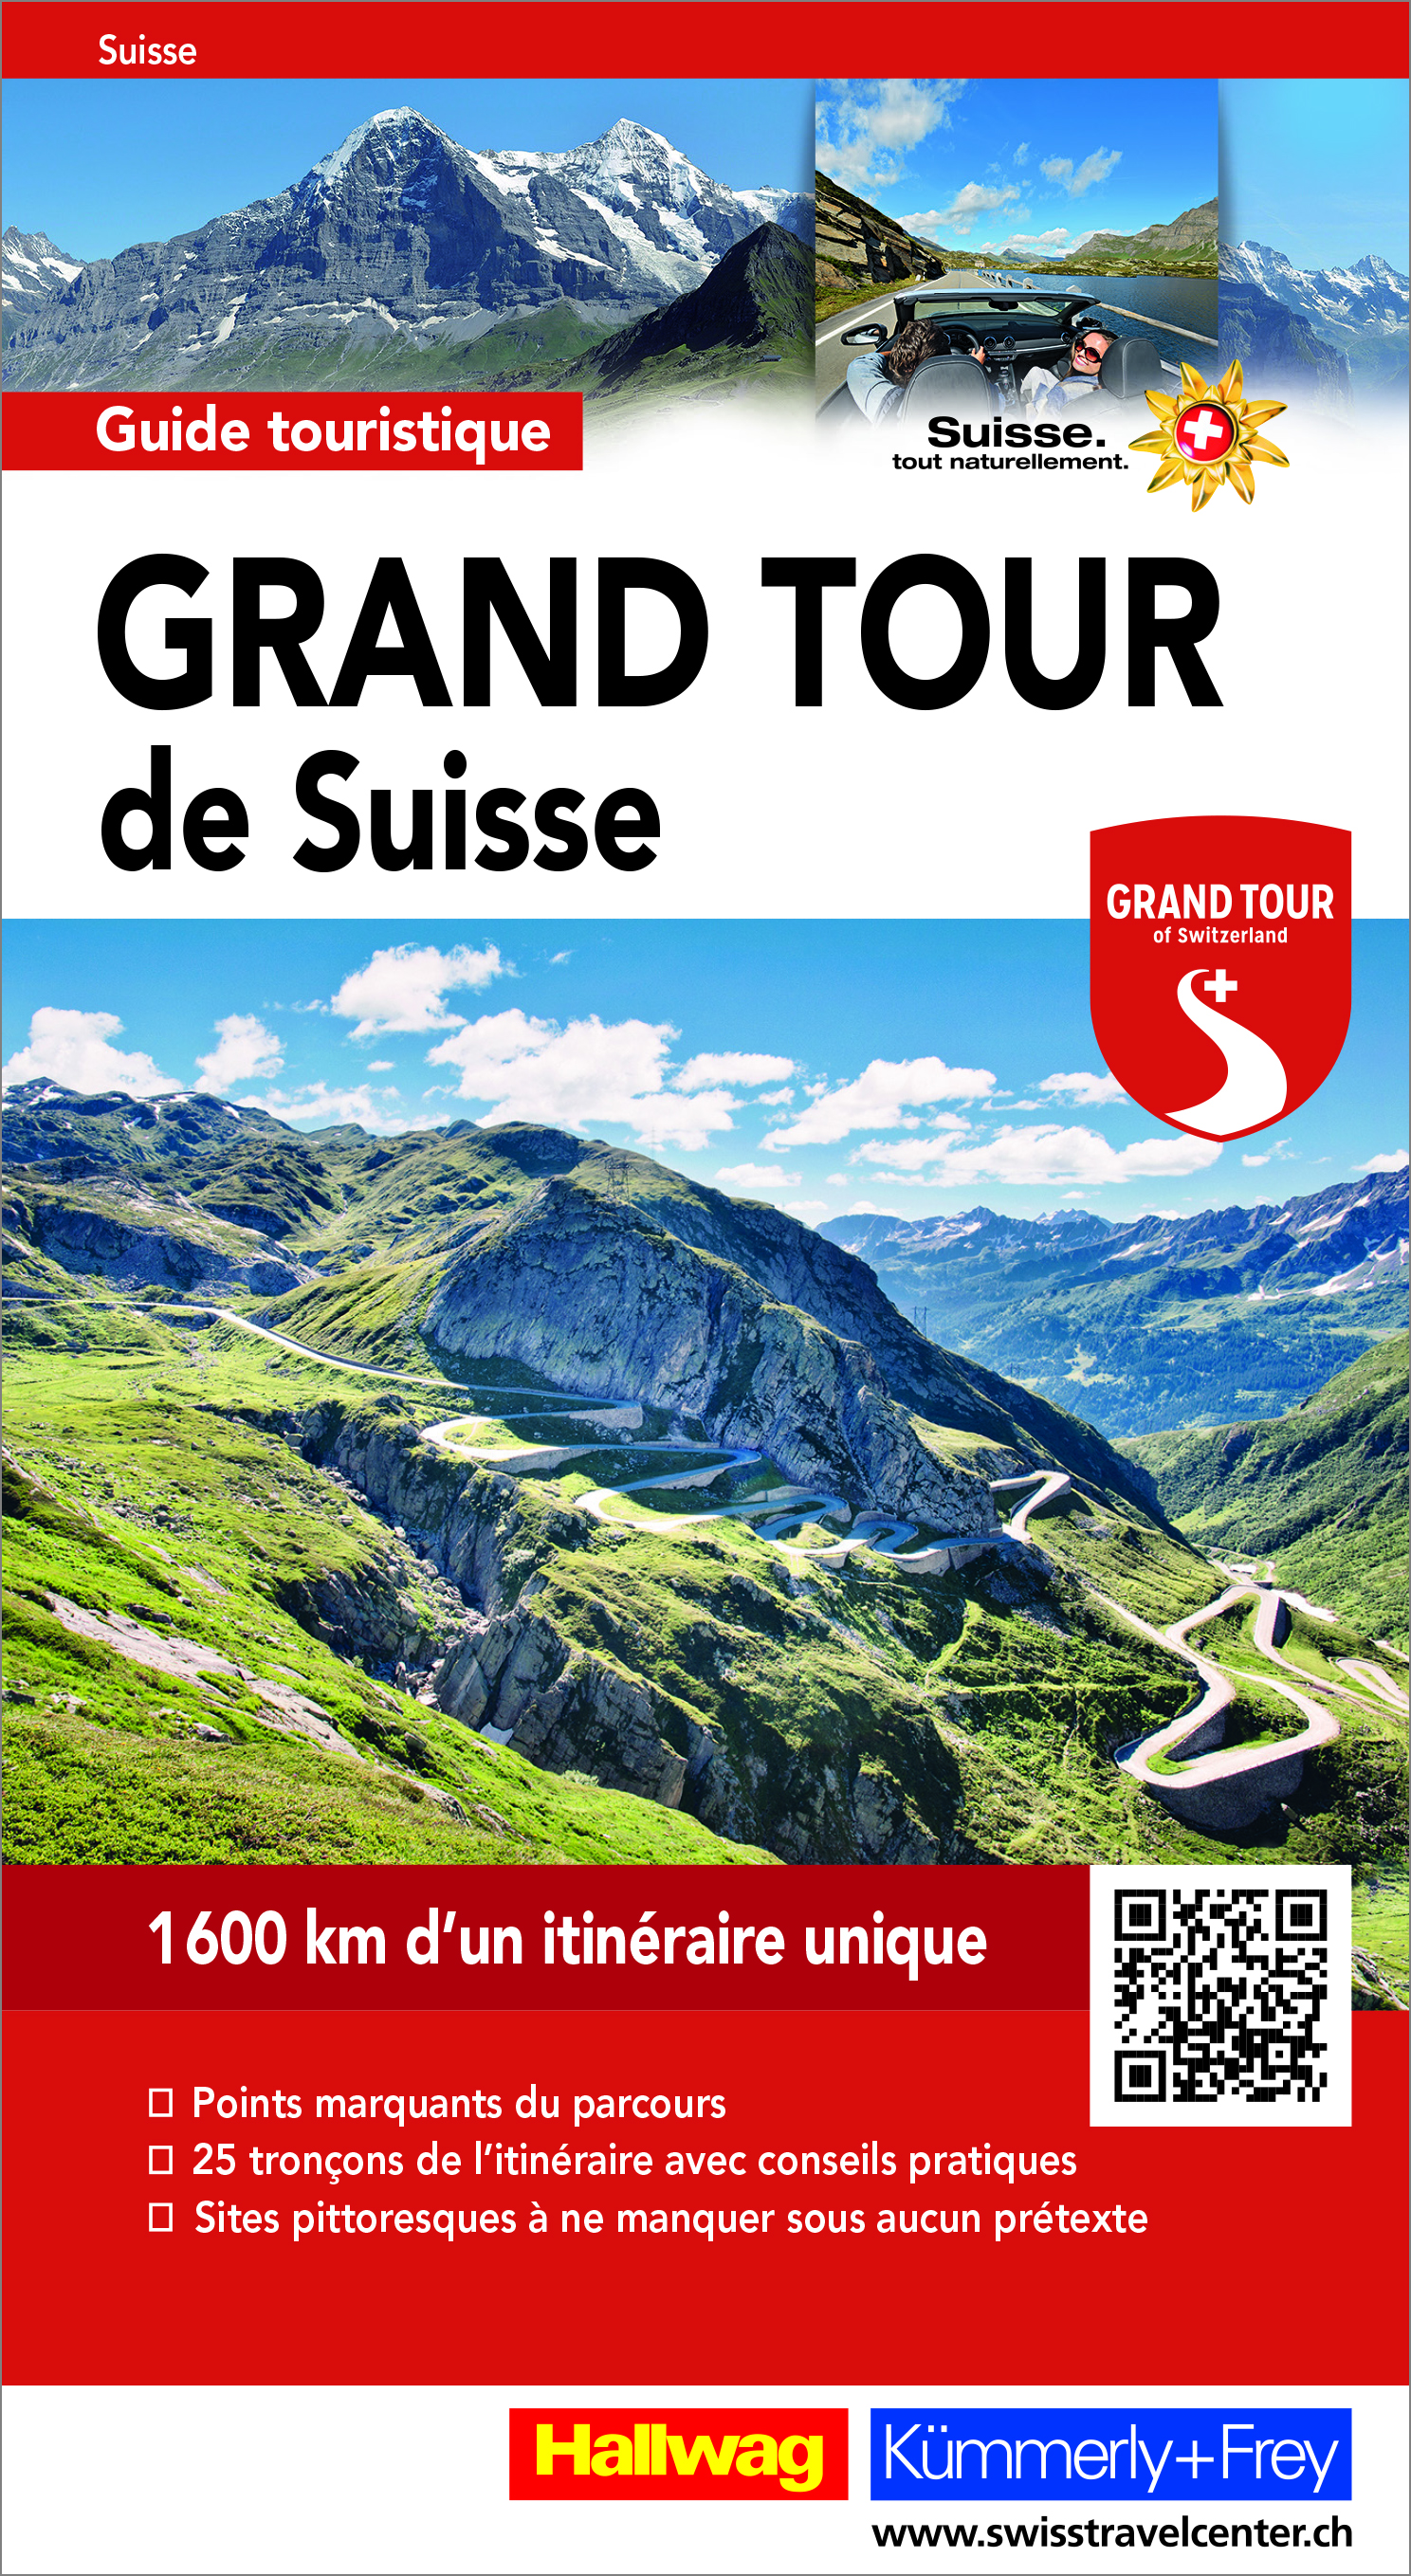 Grand Tour tourist guide